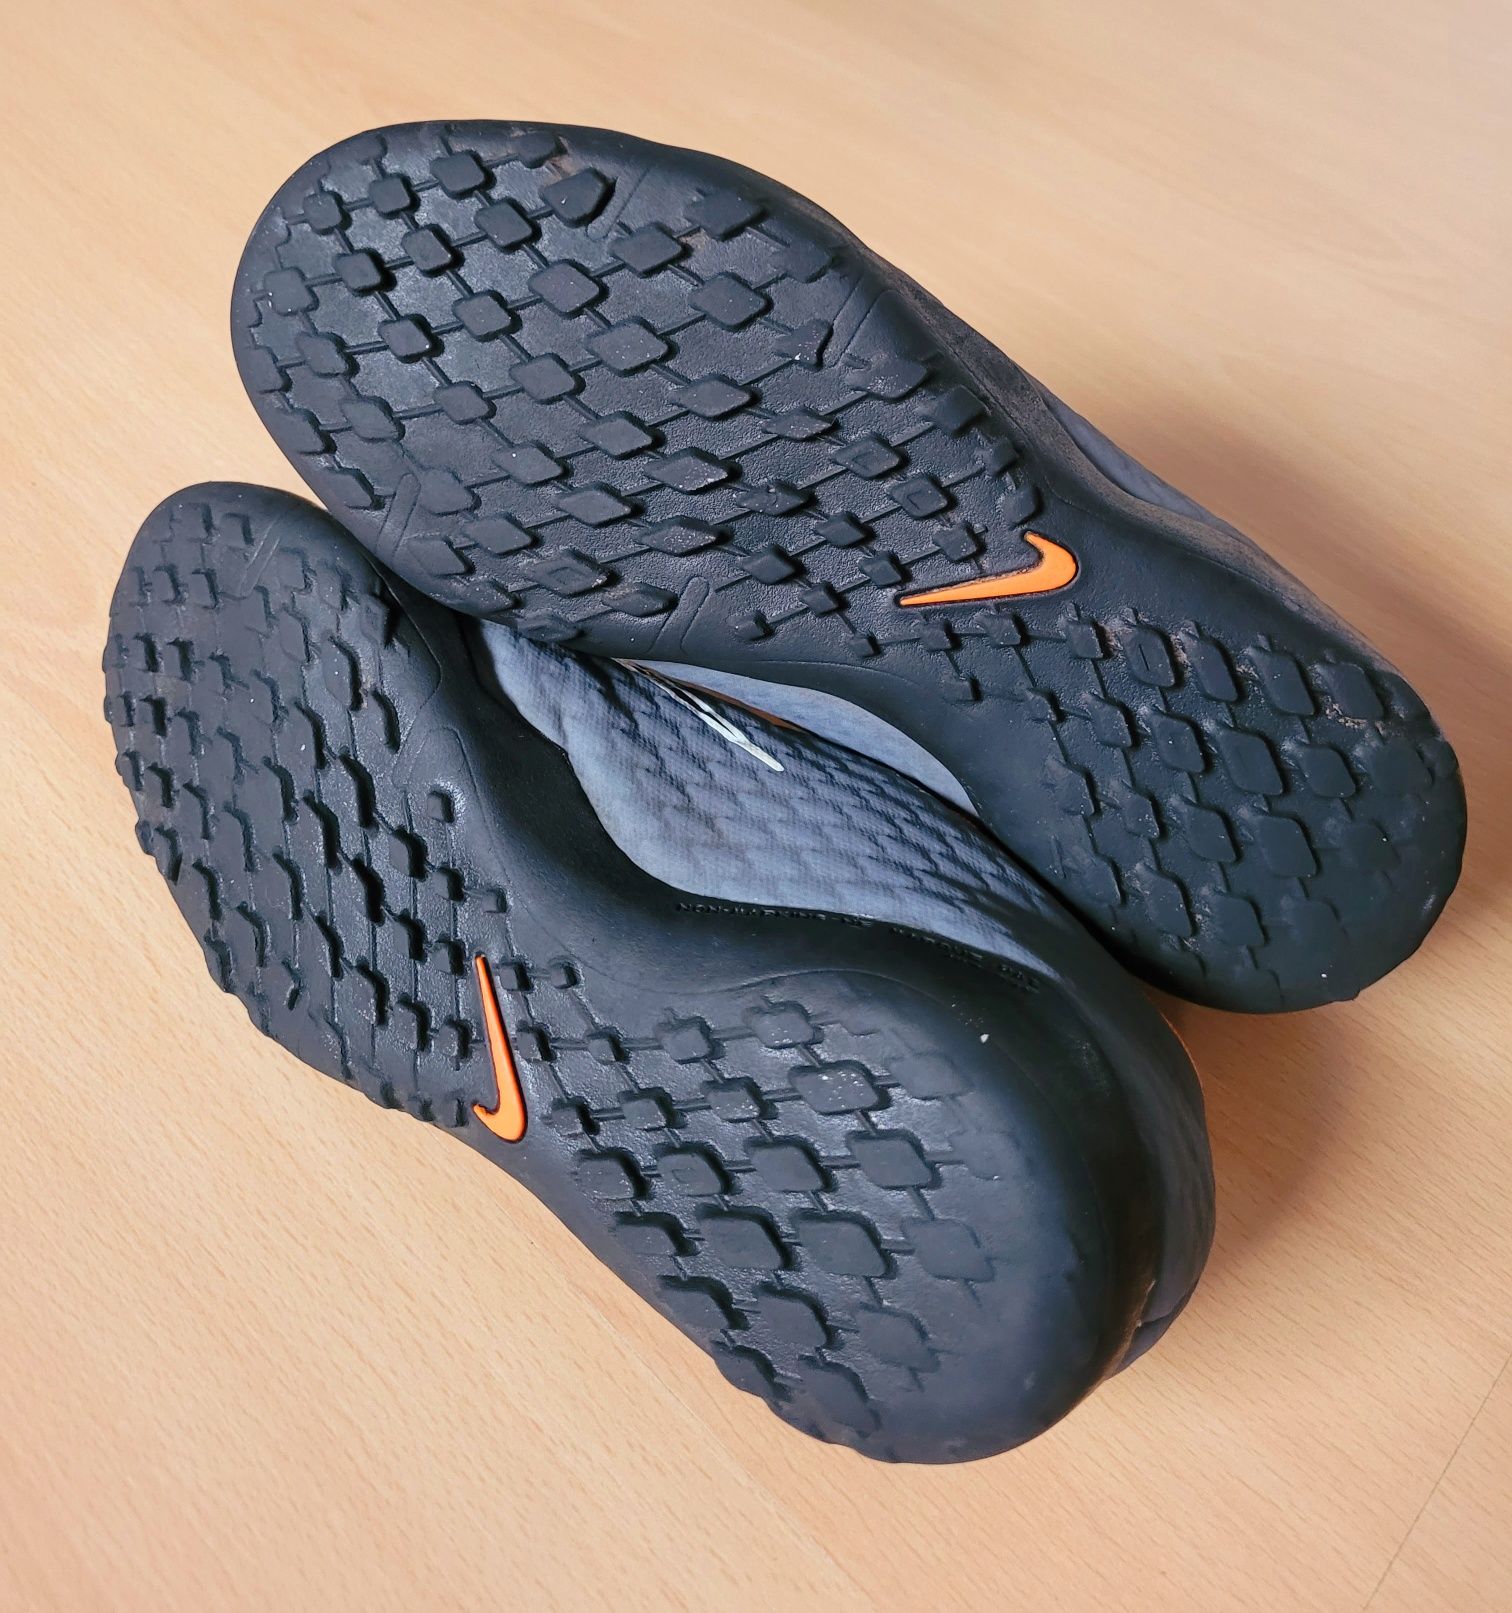 Buty piłkarskie, turfy Nike Hypervenom X r.38, 24 cm